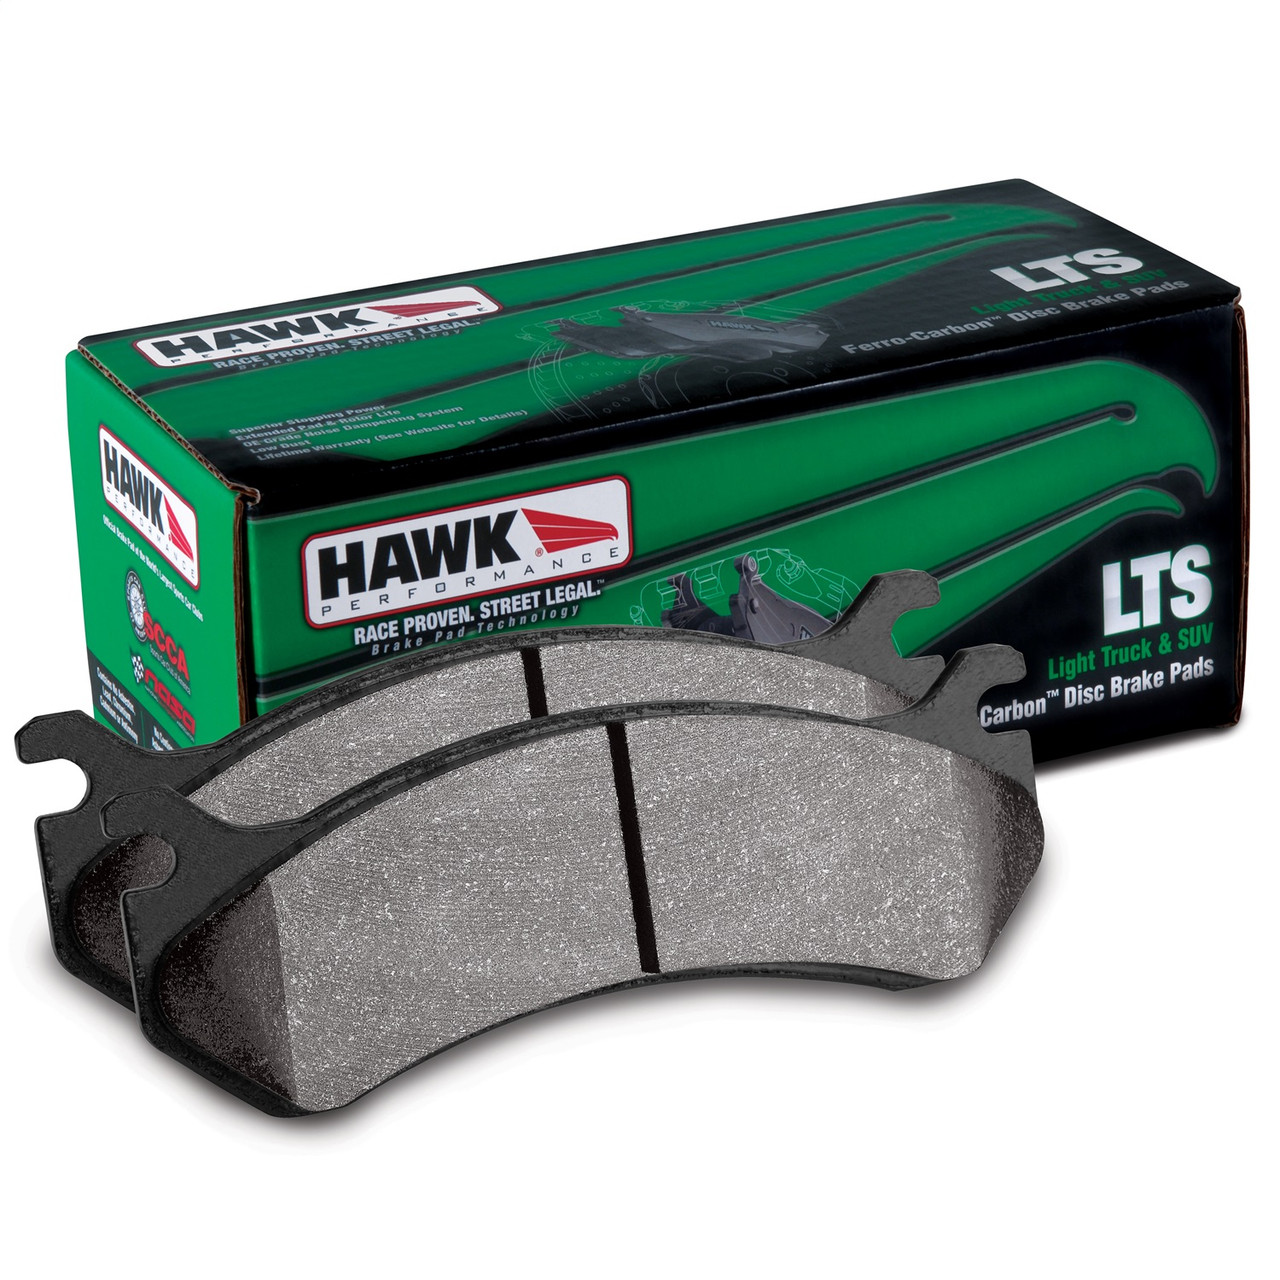 Hawk_Performance_LTS_brake_pads.jpg